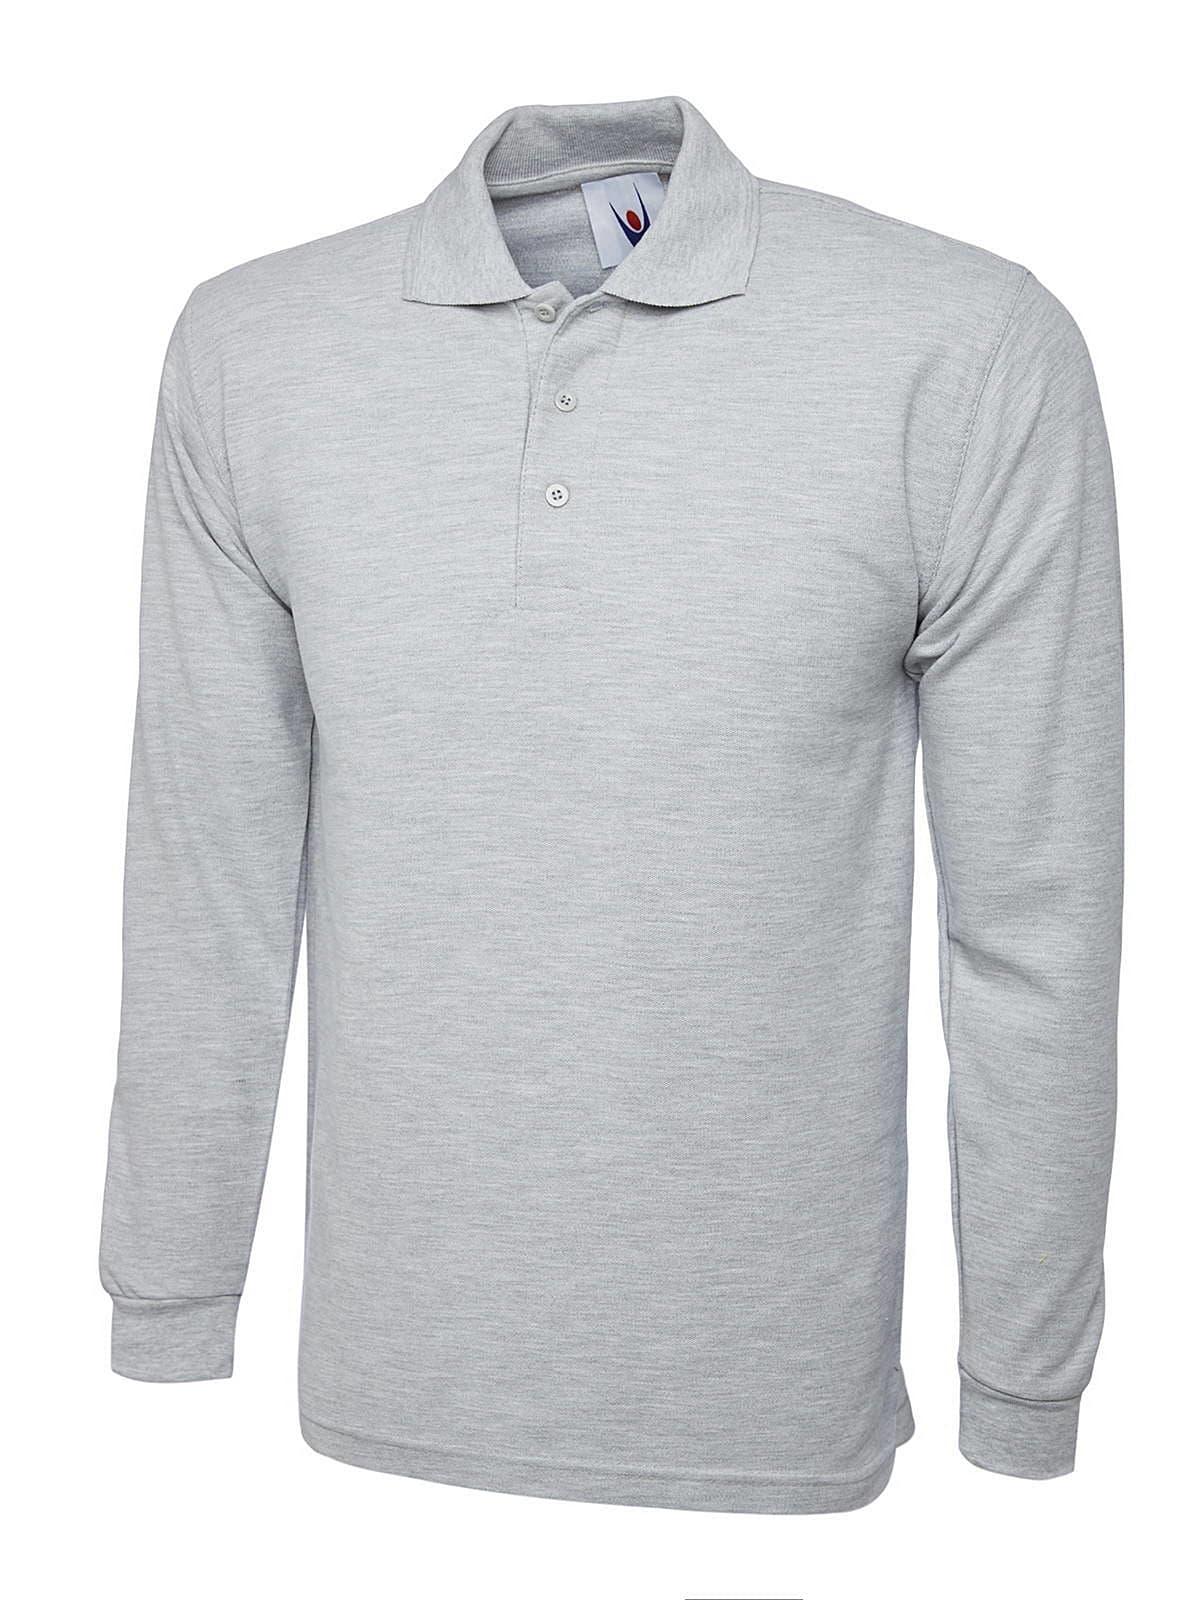 Uneek 220GSM Long-Sleeve Polo Shirt in Heather Grey (Product Code: UC113)